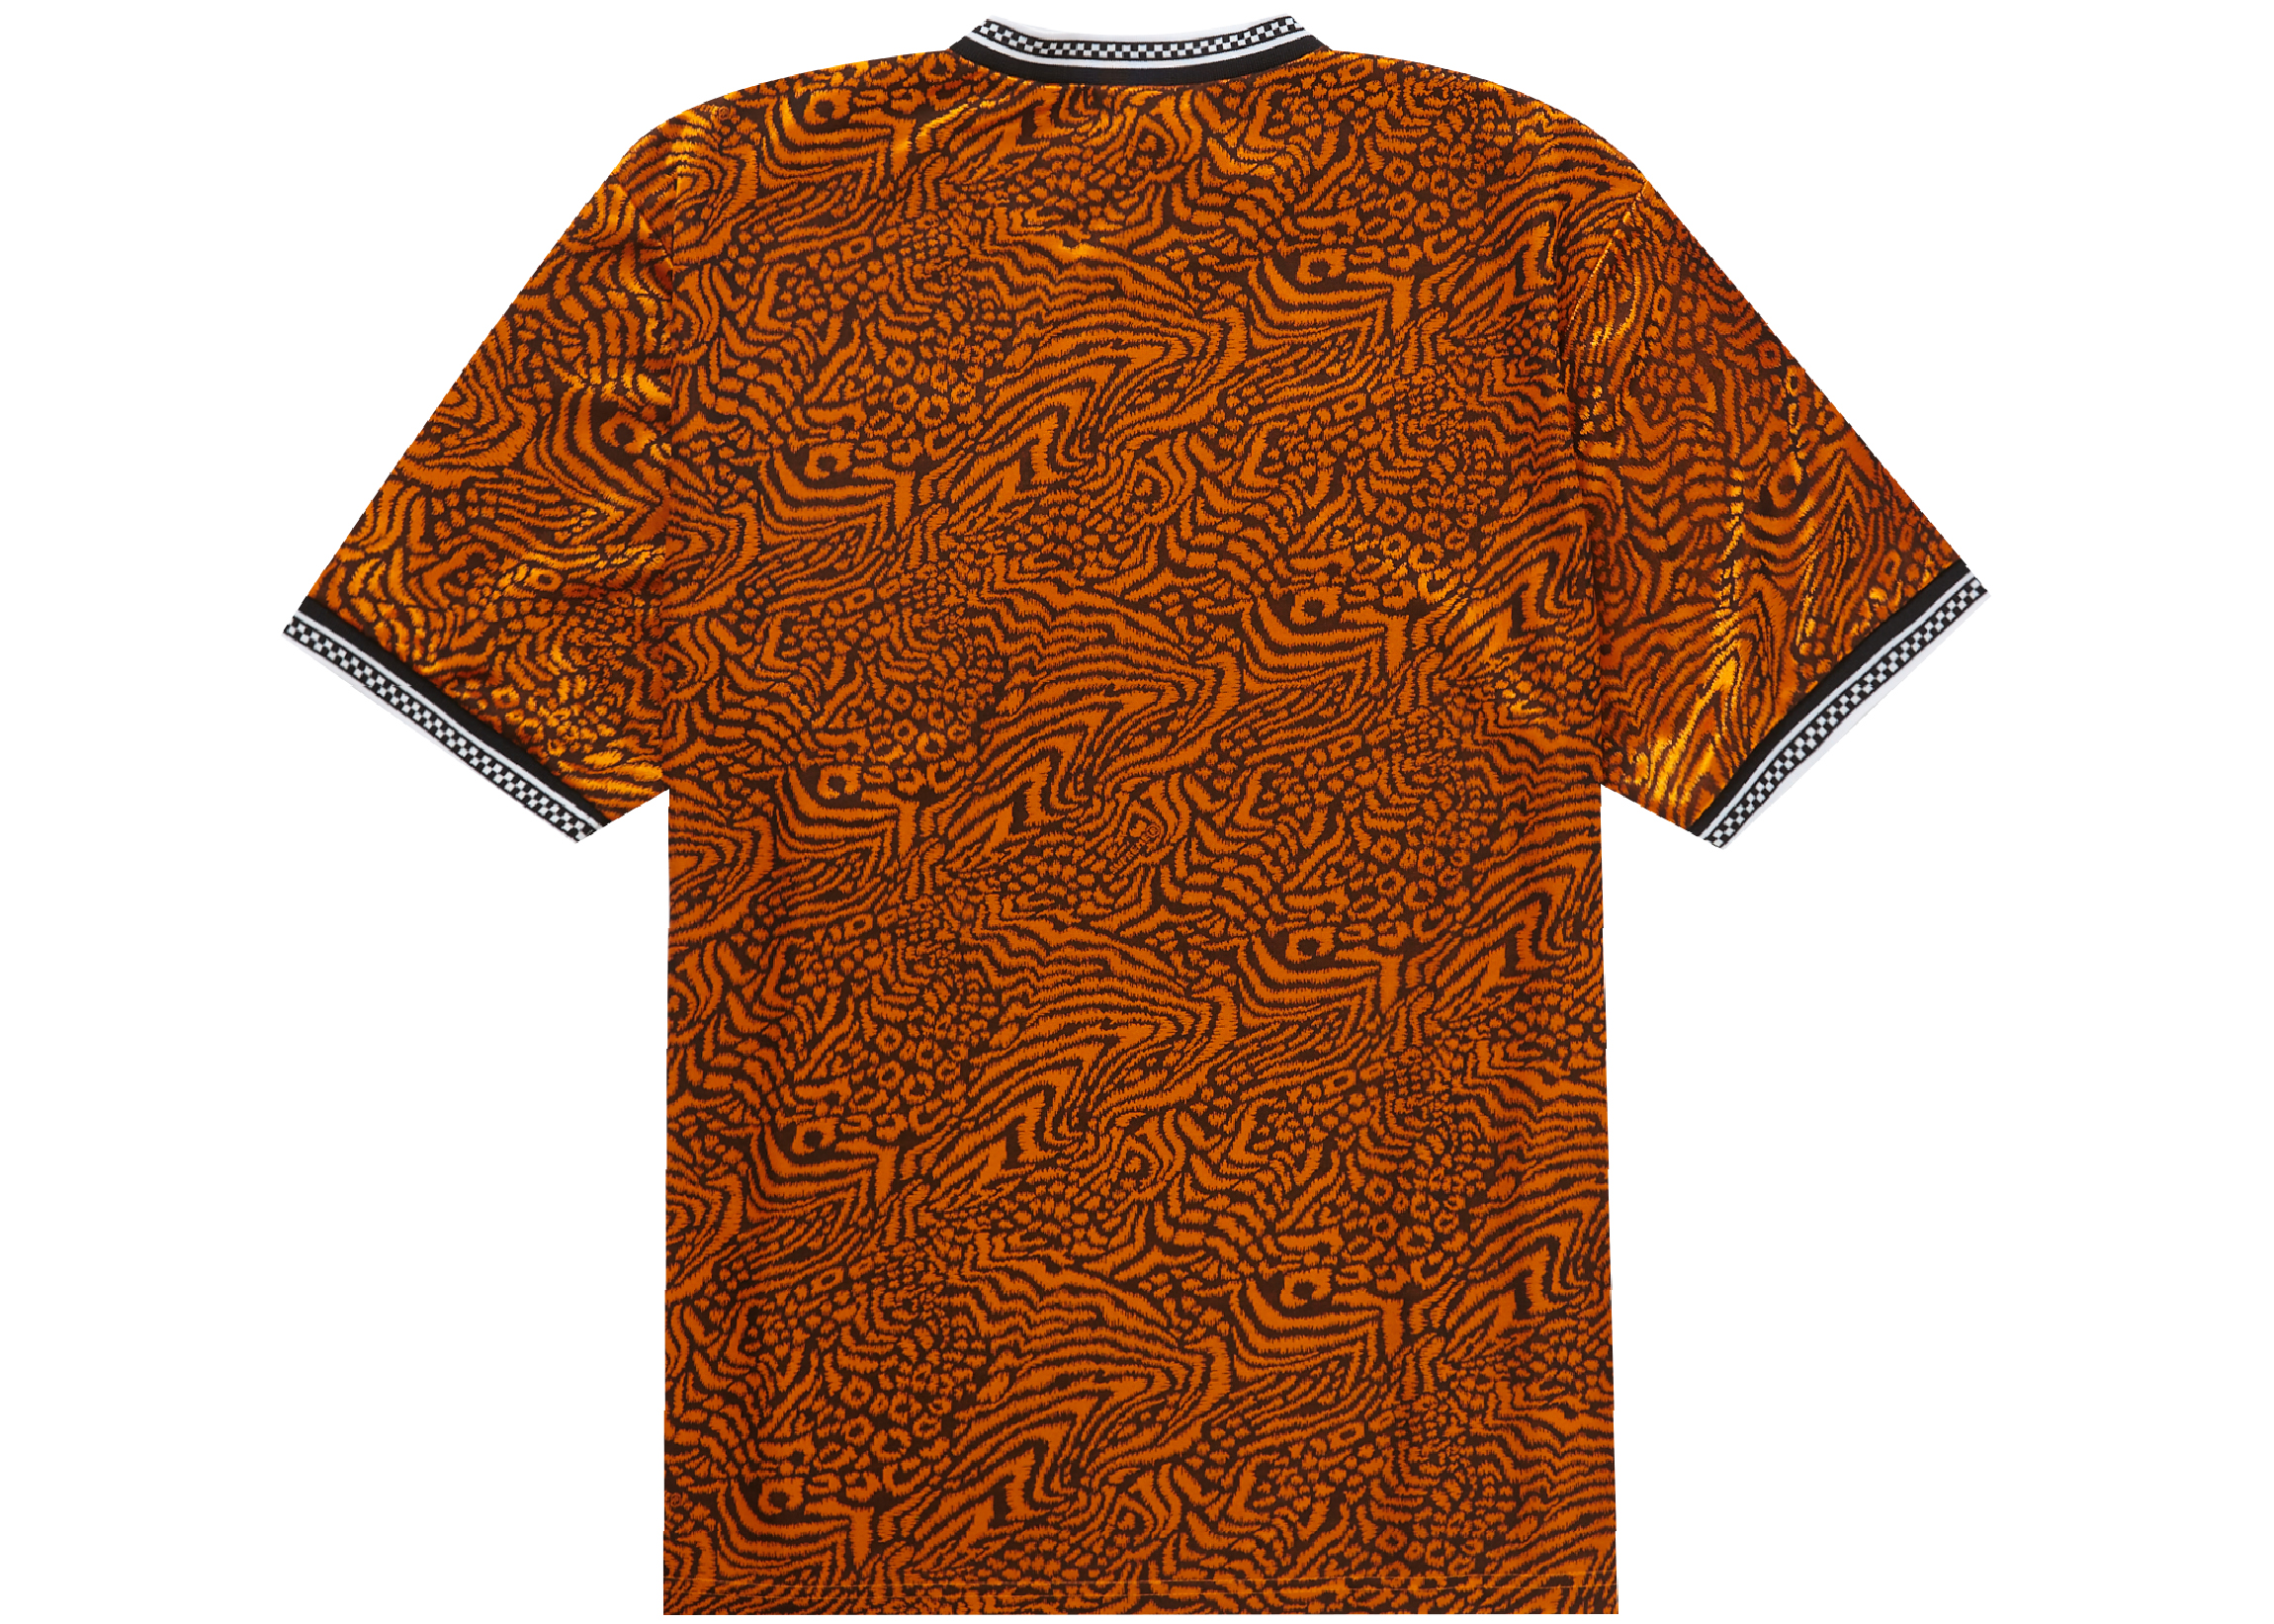 Supreme Umbro Jacquard Animal Print Soccer Jersey Orange